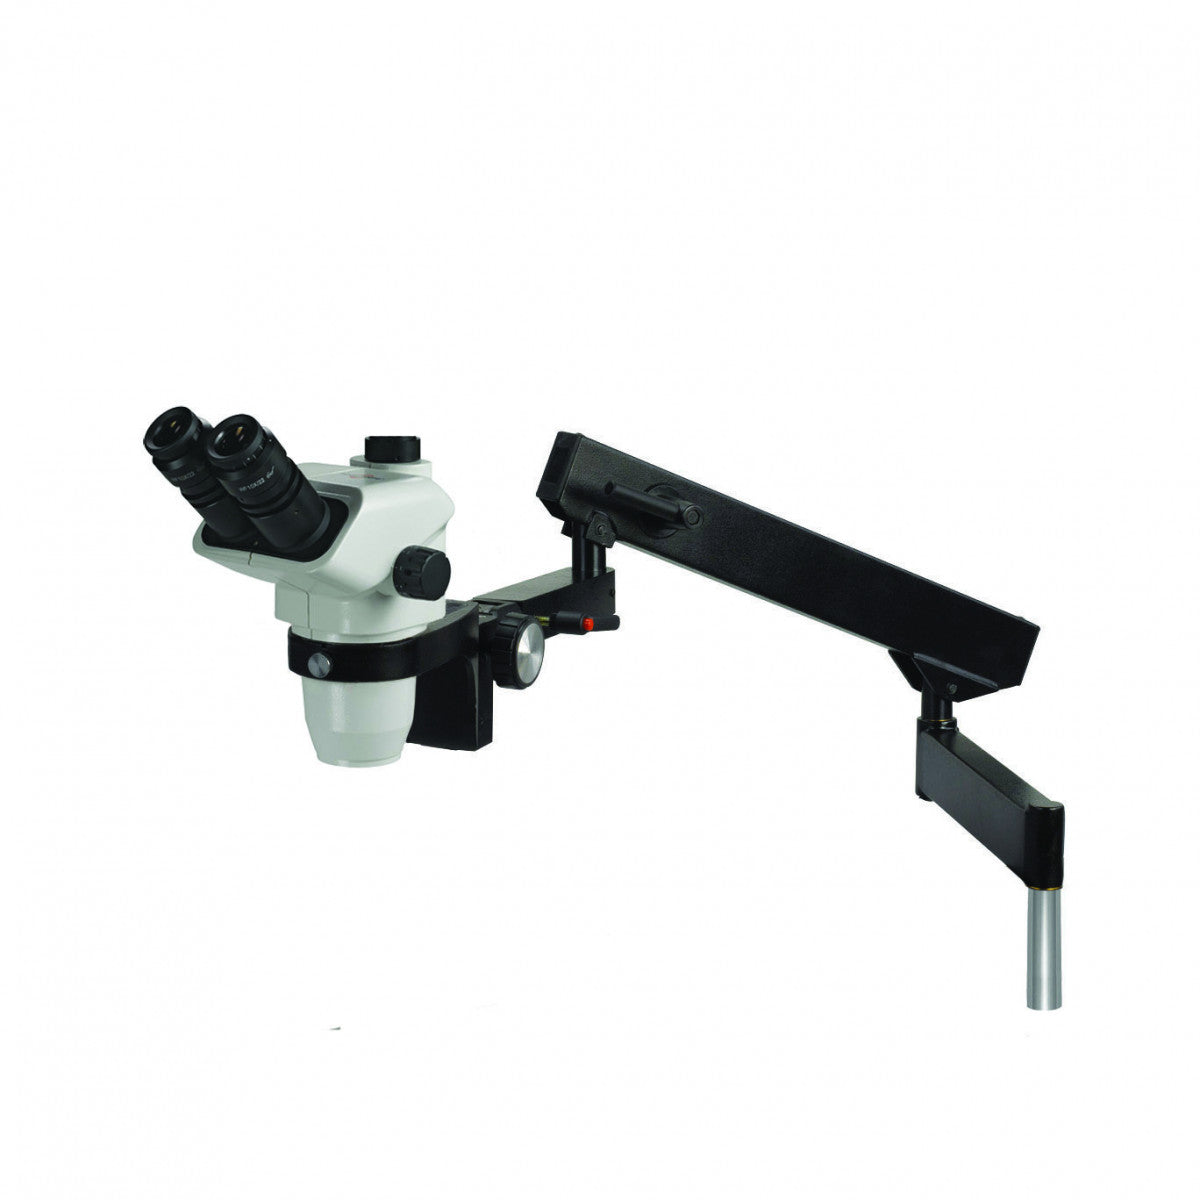 Accu-Scope 3075 / 3076 Zoom Stereo Microscope on Flex Arm